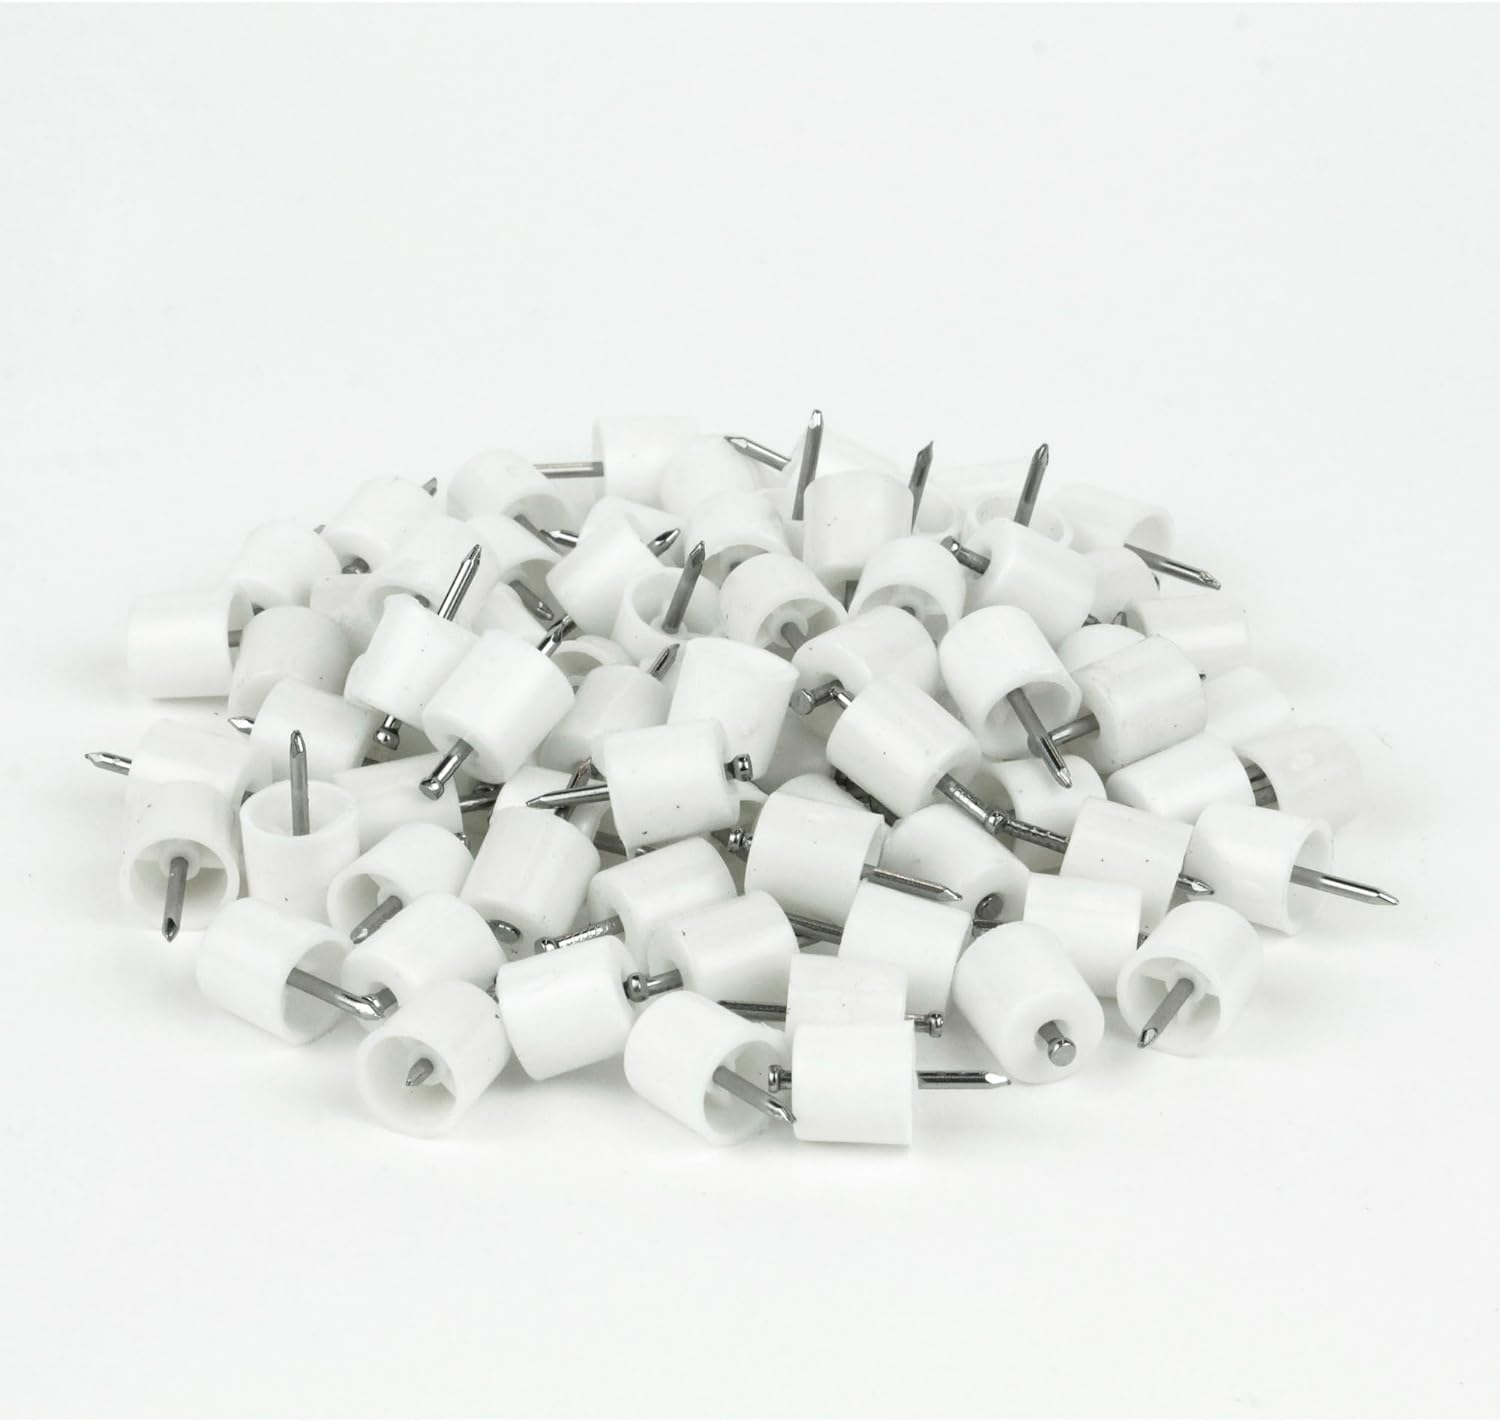 Nail-on Shelf Pin 11mm | Shelves Support | Shelf Holders Pins (100Pcs, White)